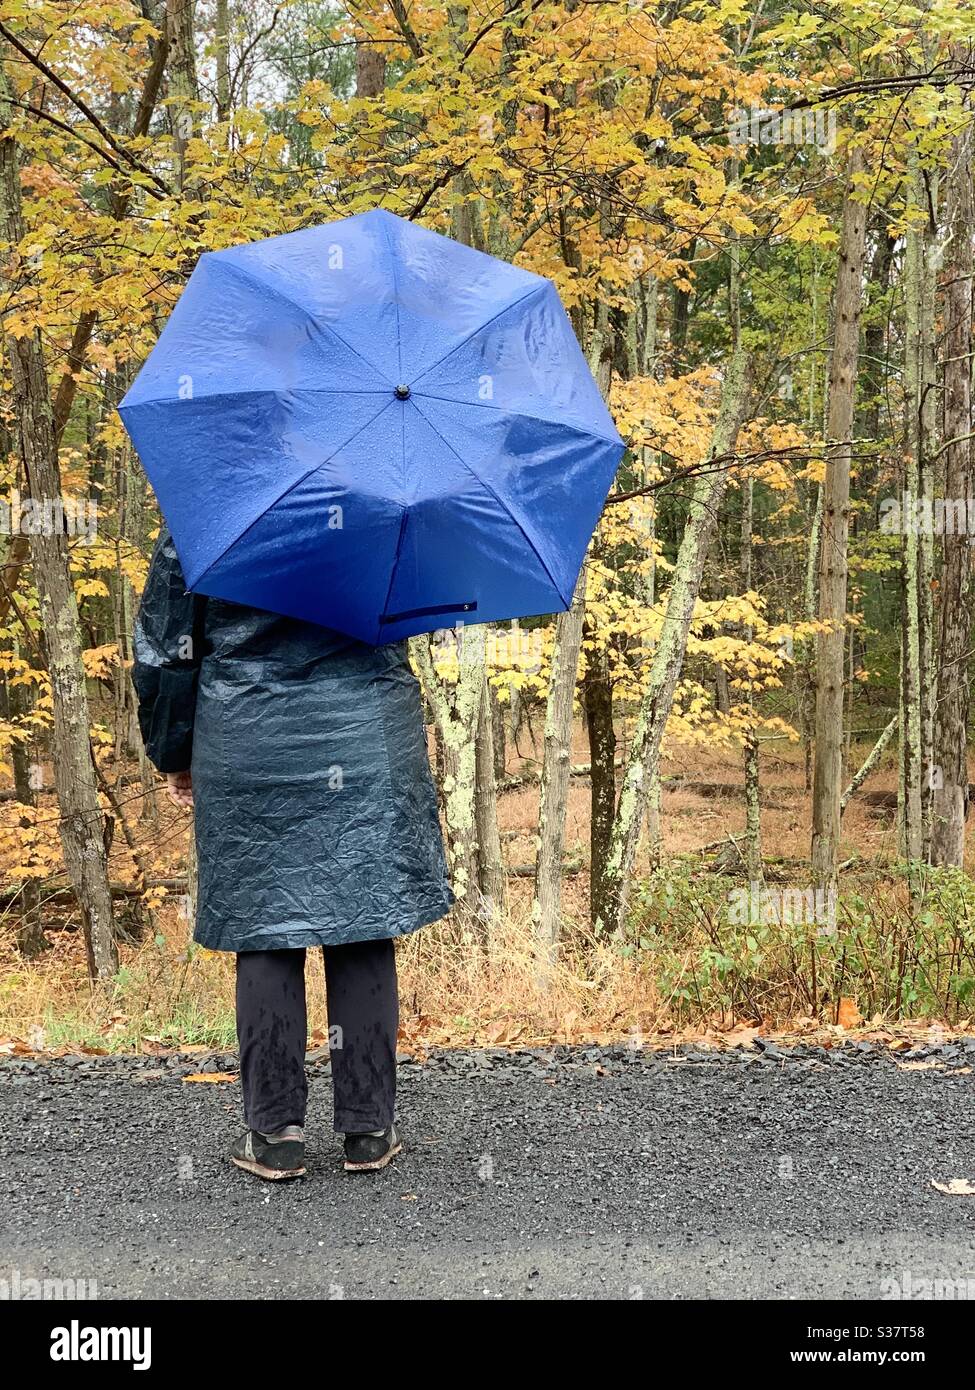 Woman walking in rain in the autumn with umbrella Stock Photo